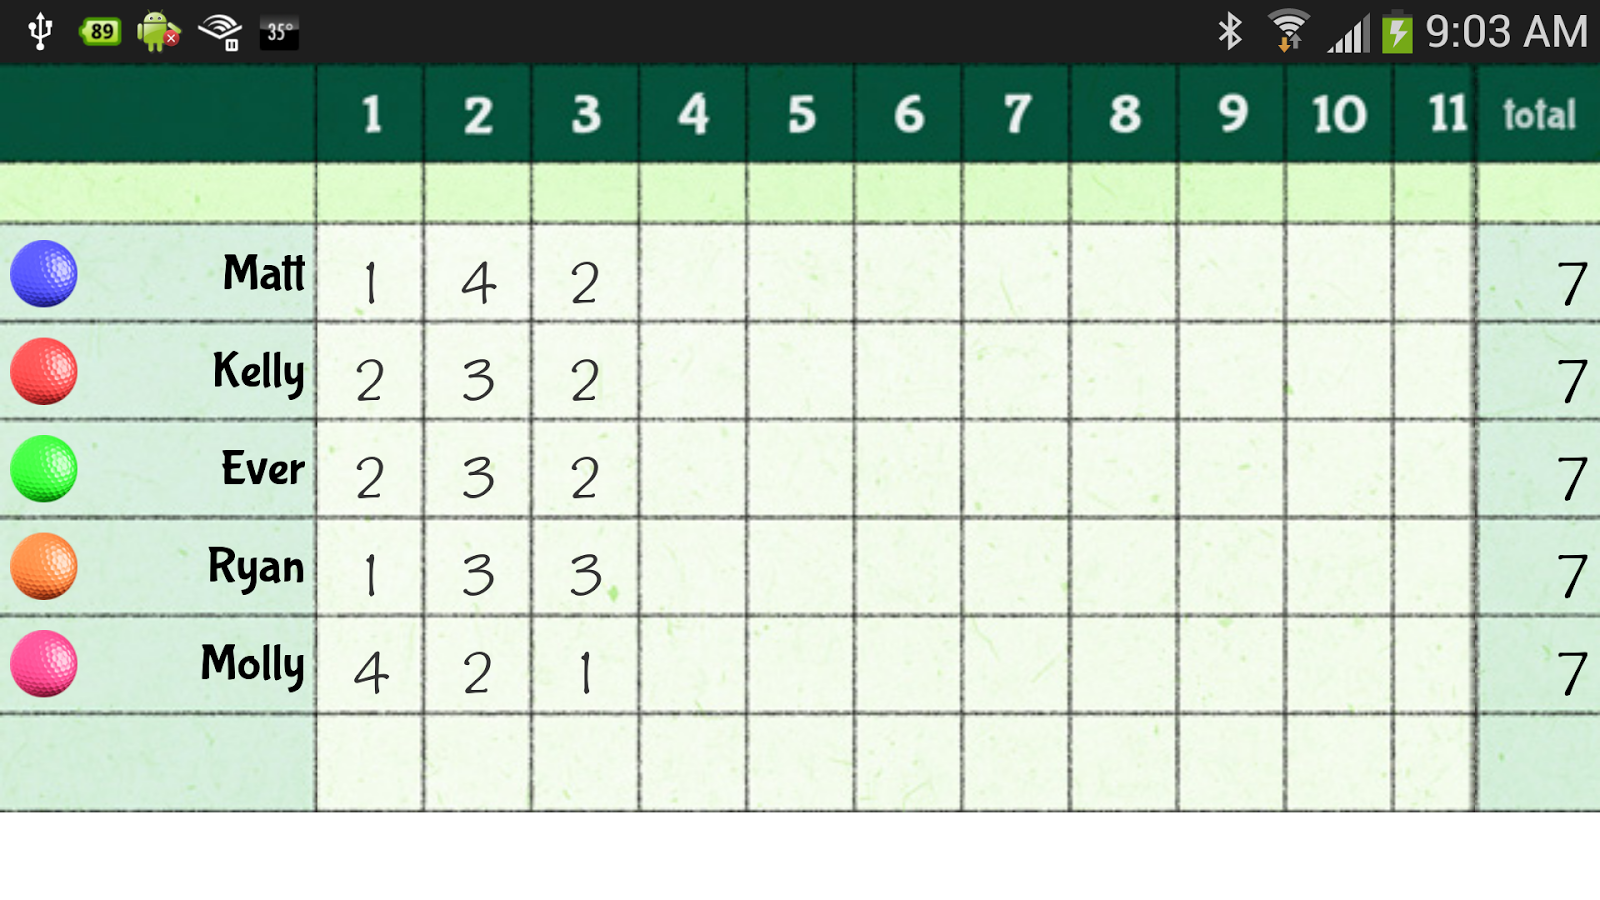 how-mini-golf-scoring-works